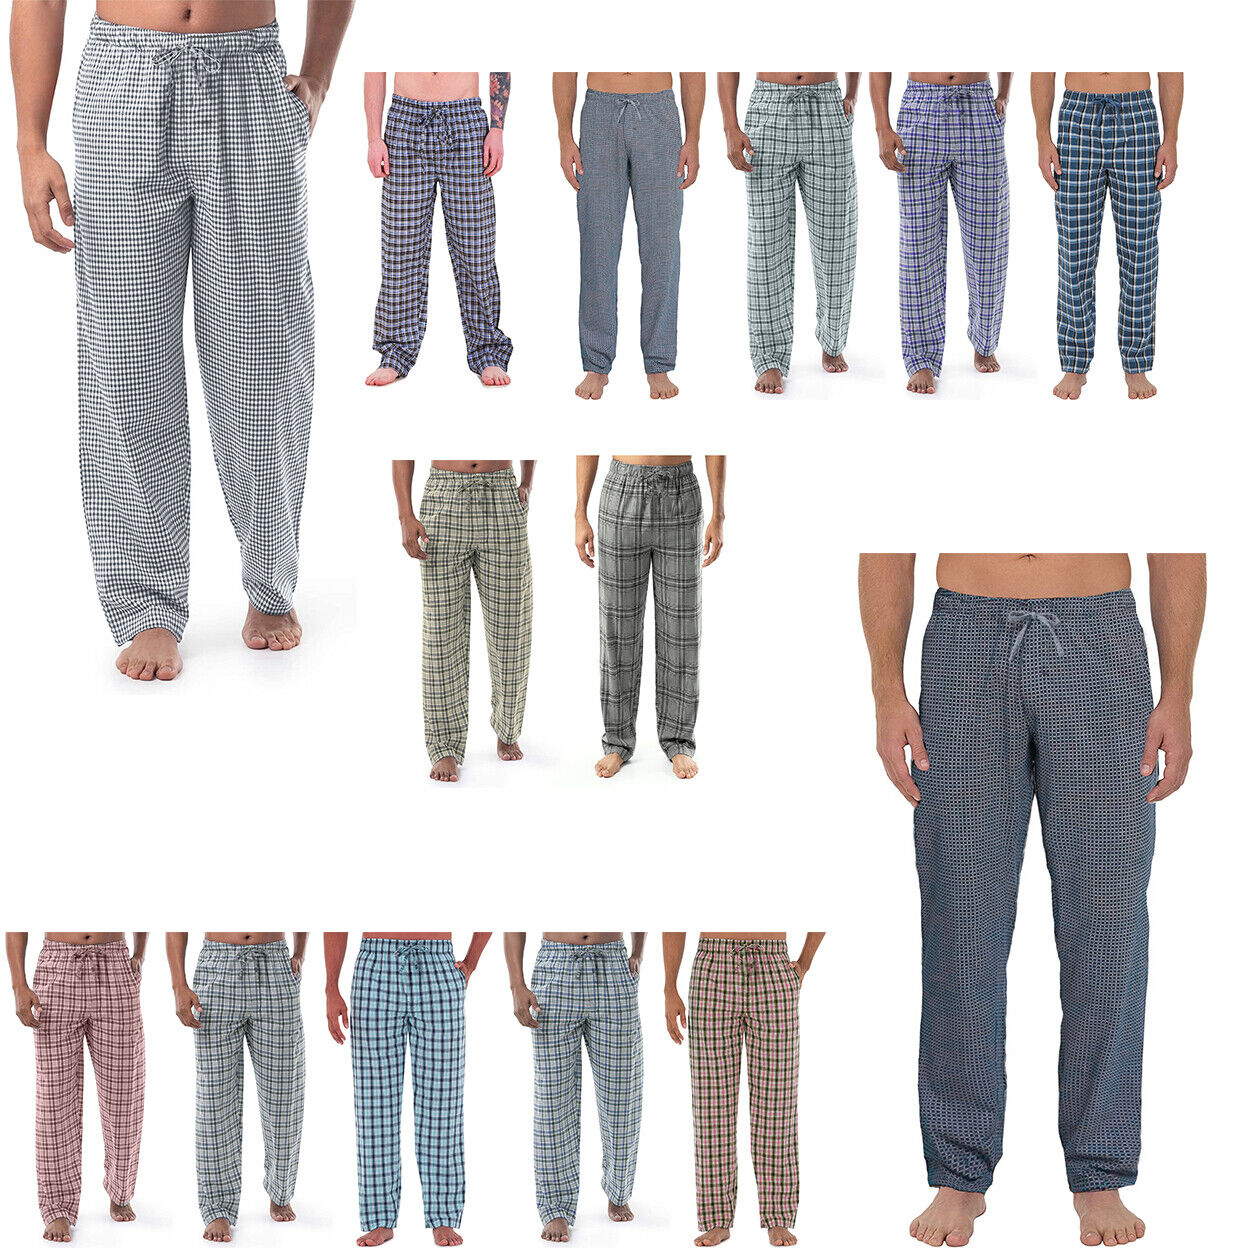 3-Pack: Men's Ultra-Soft Solid & Plaid Cotton Jersey Knit Comfy Sleep Lounge Pajama Pants - Plaid, Large